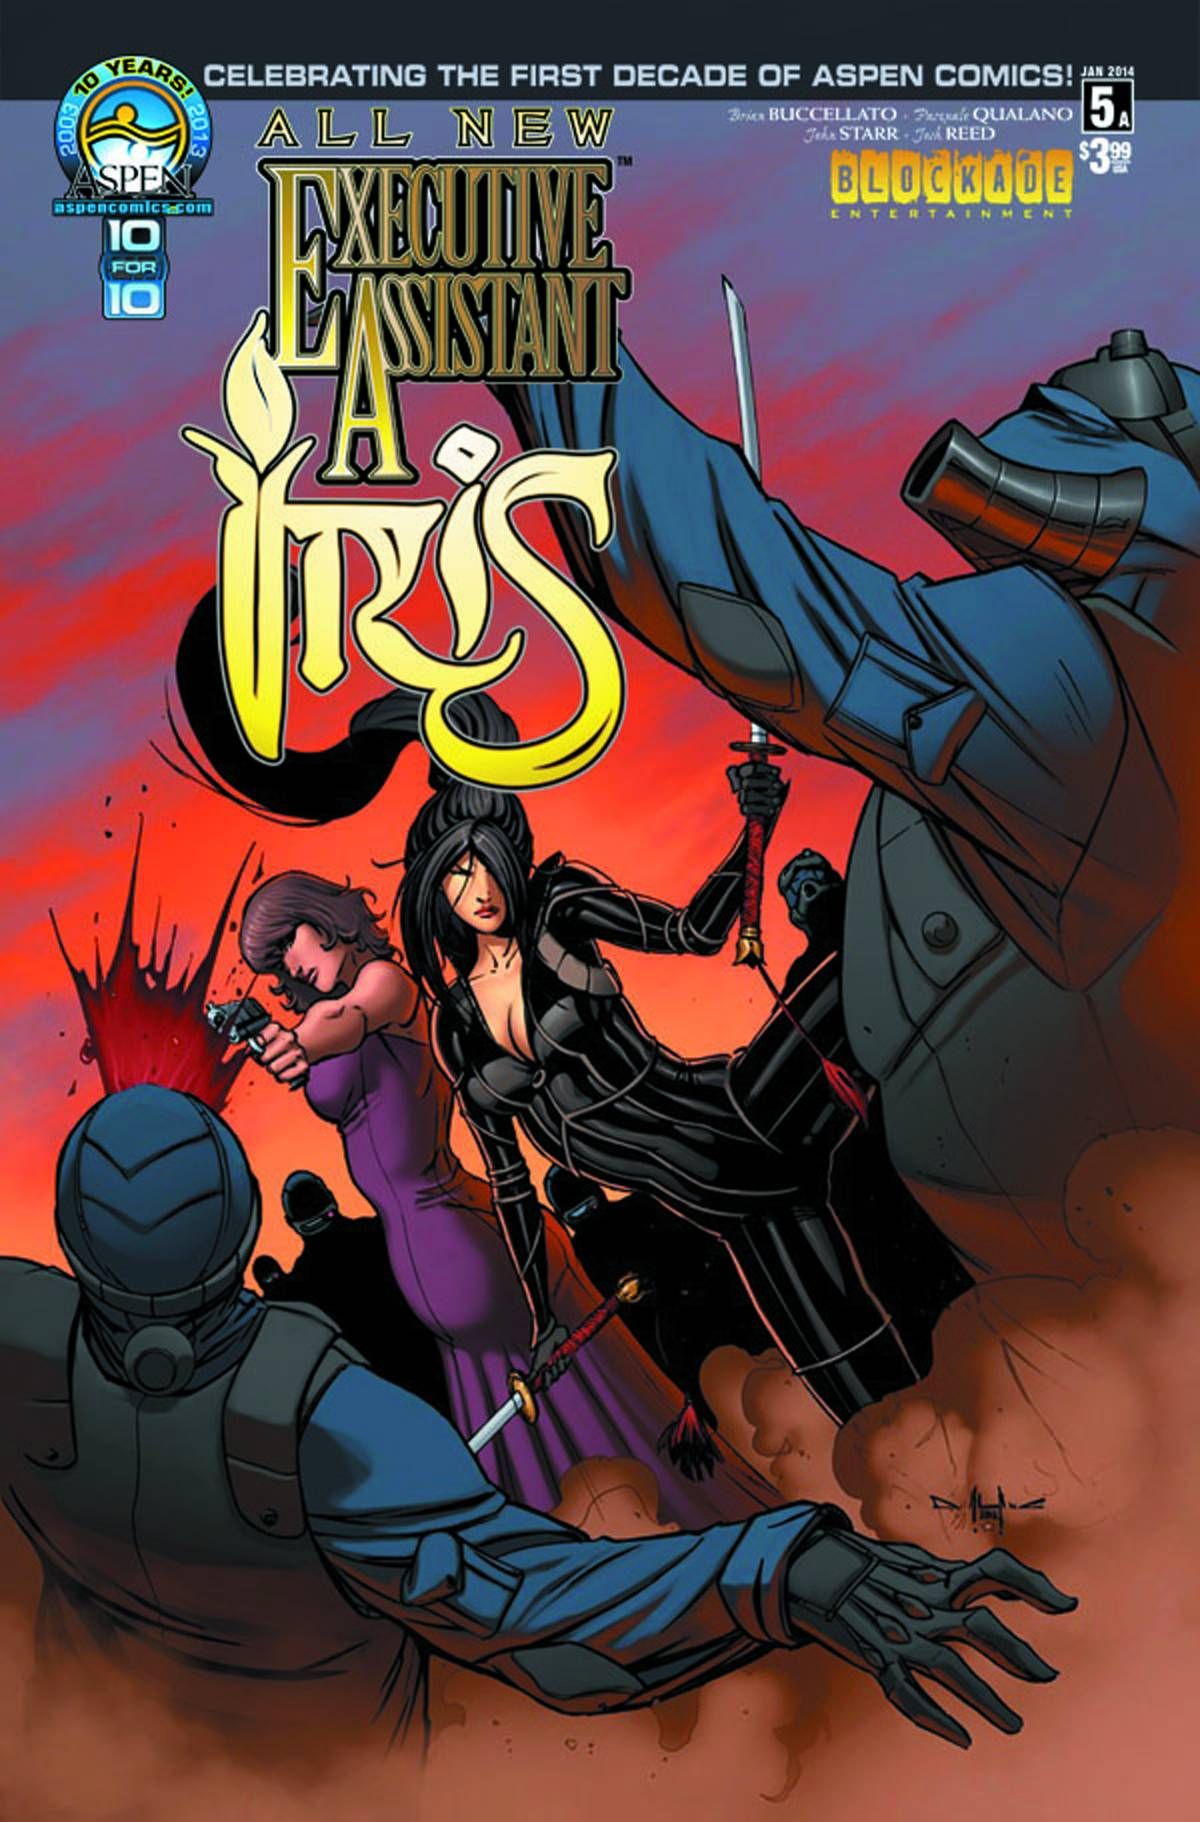 All New Executive Assistant Iris #5 Comic